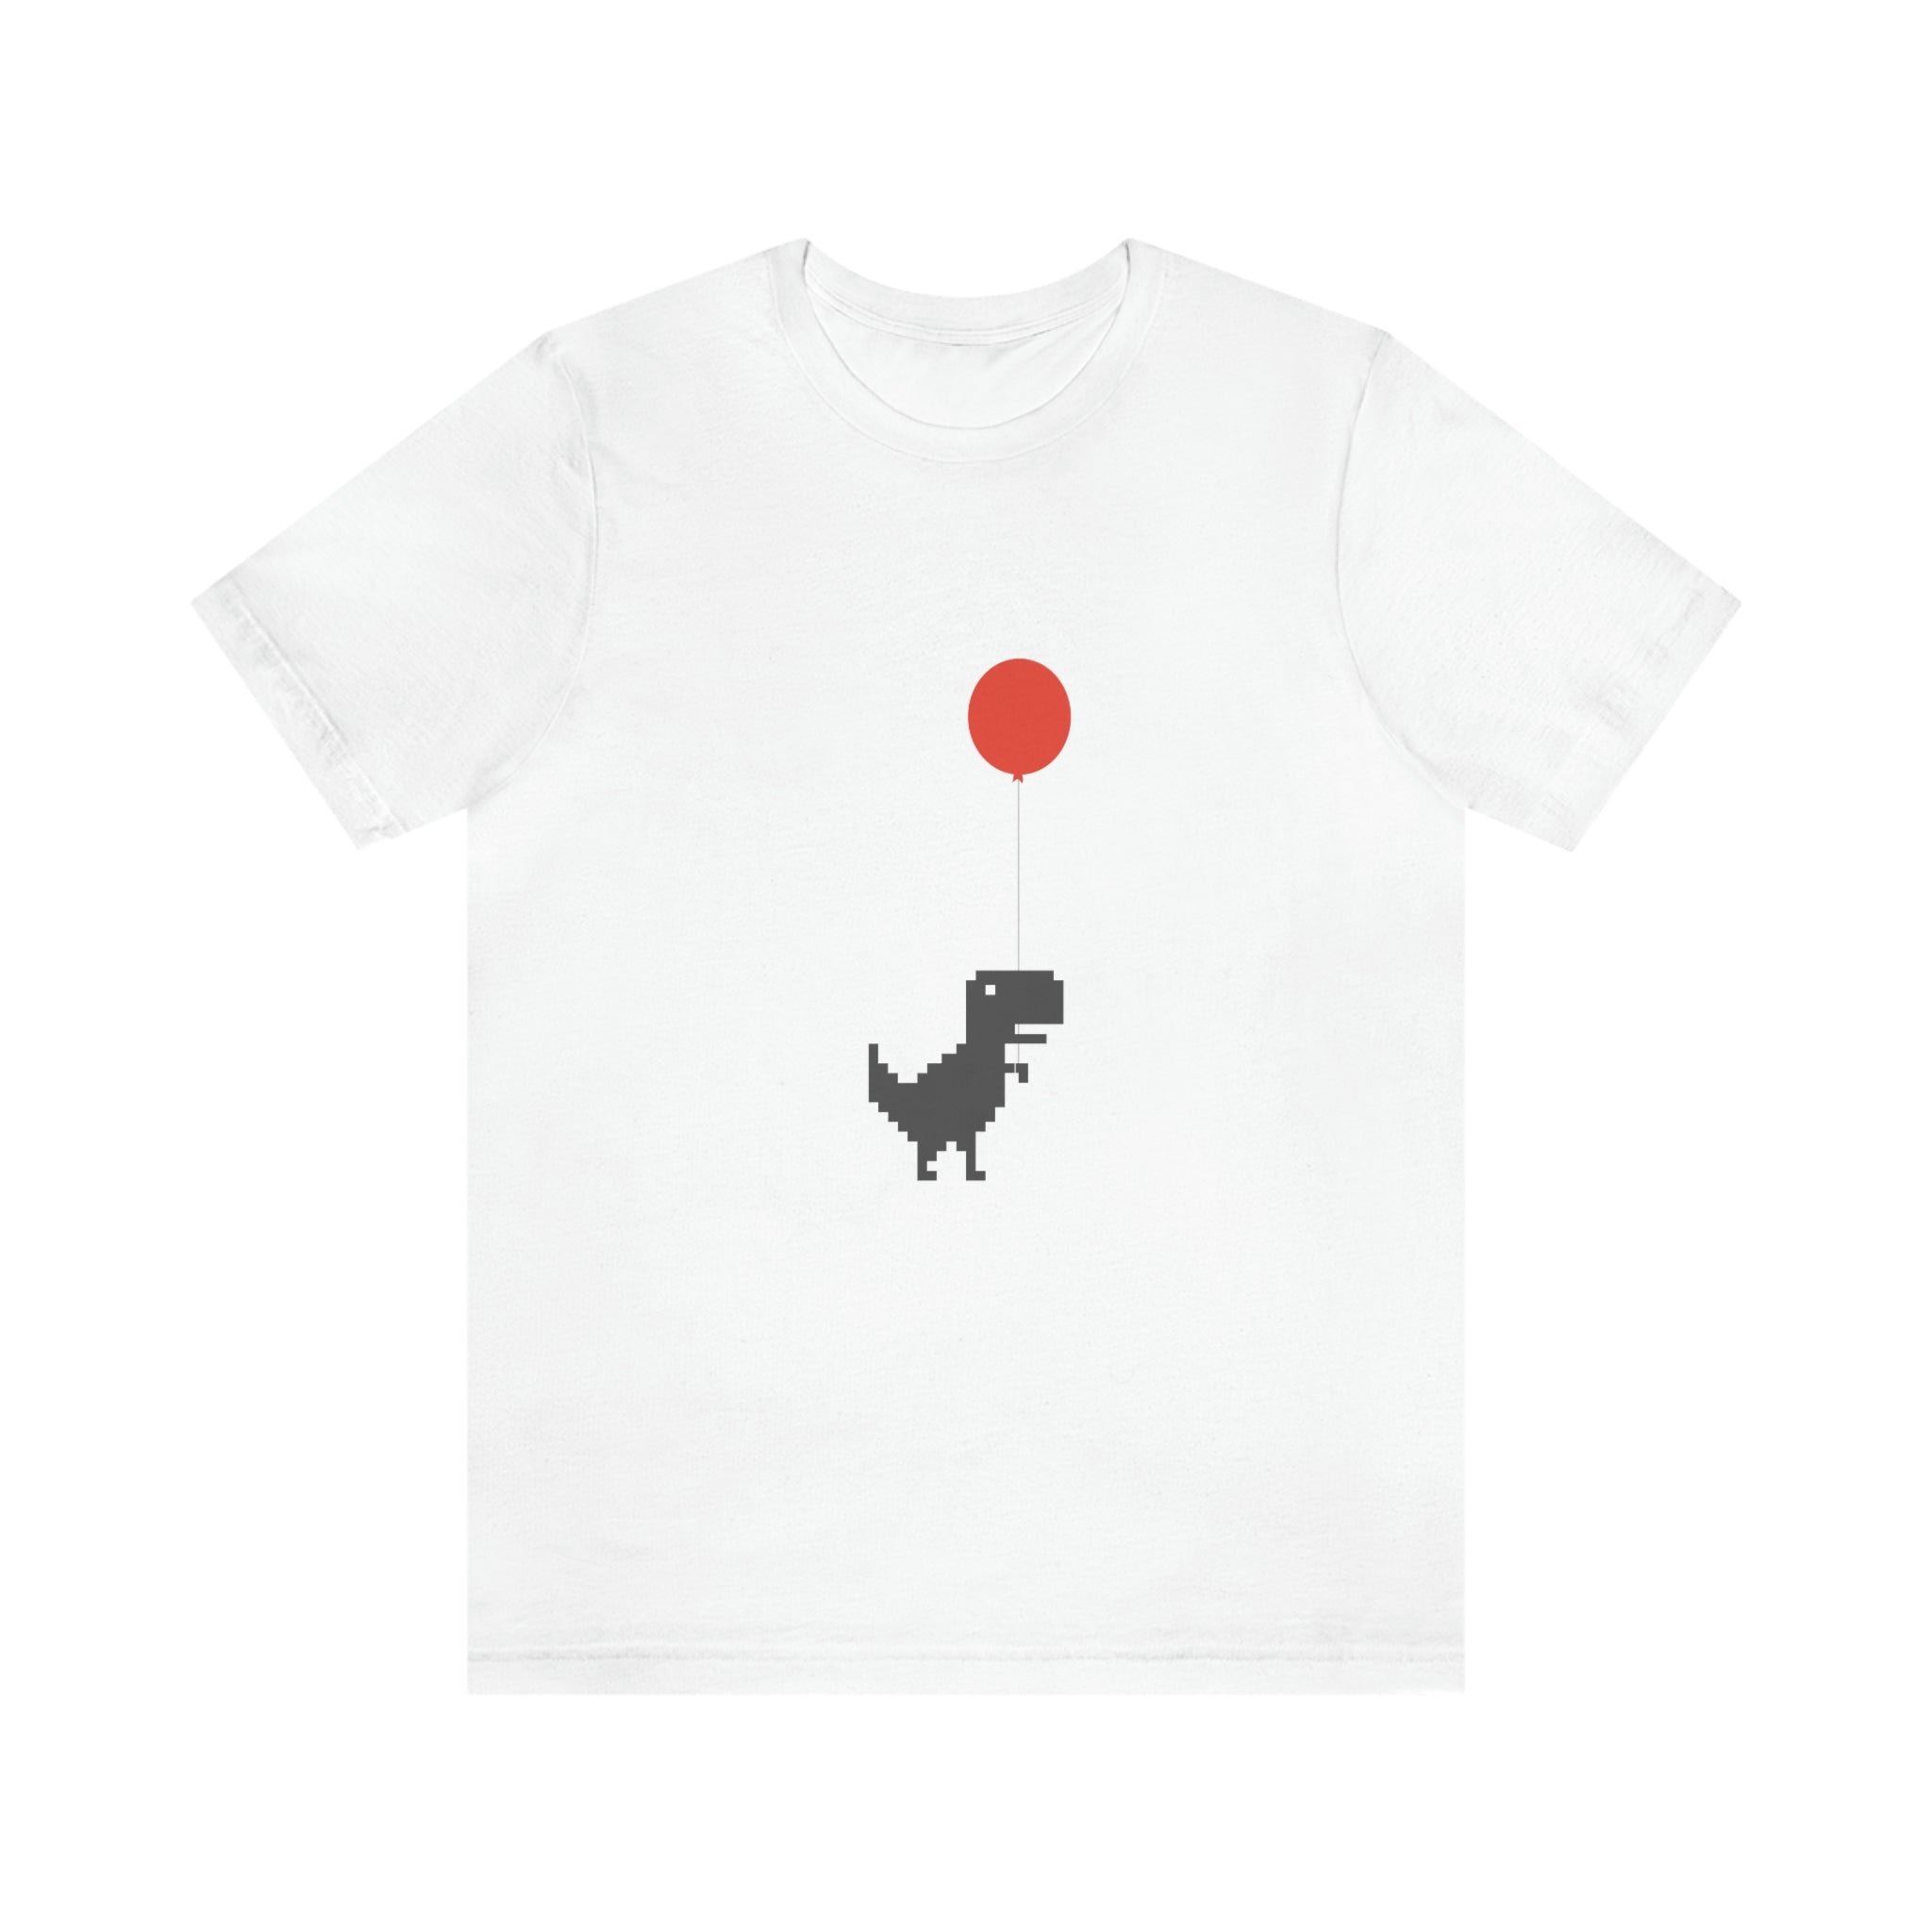 Larry the Dino, Balloon Joy! : Unisex 100% Cotton T-Shirt by Bella+Canvas